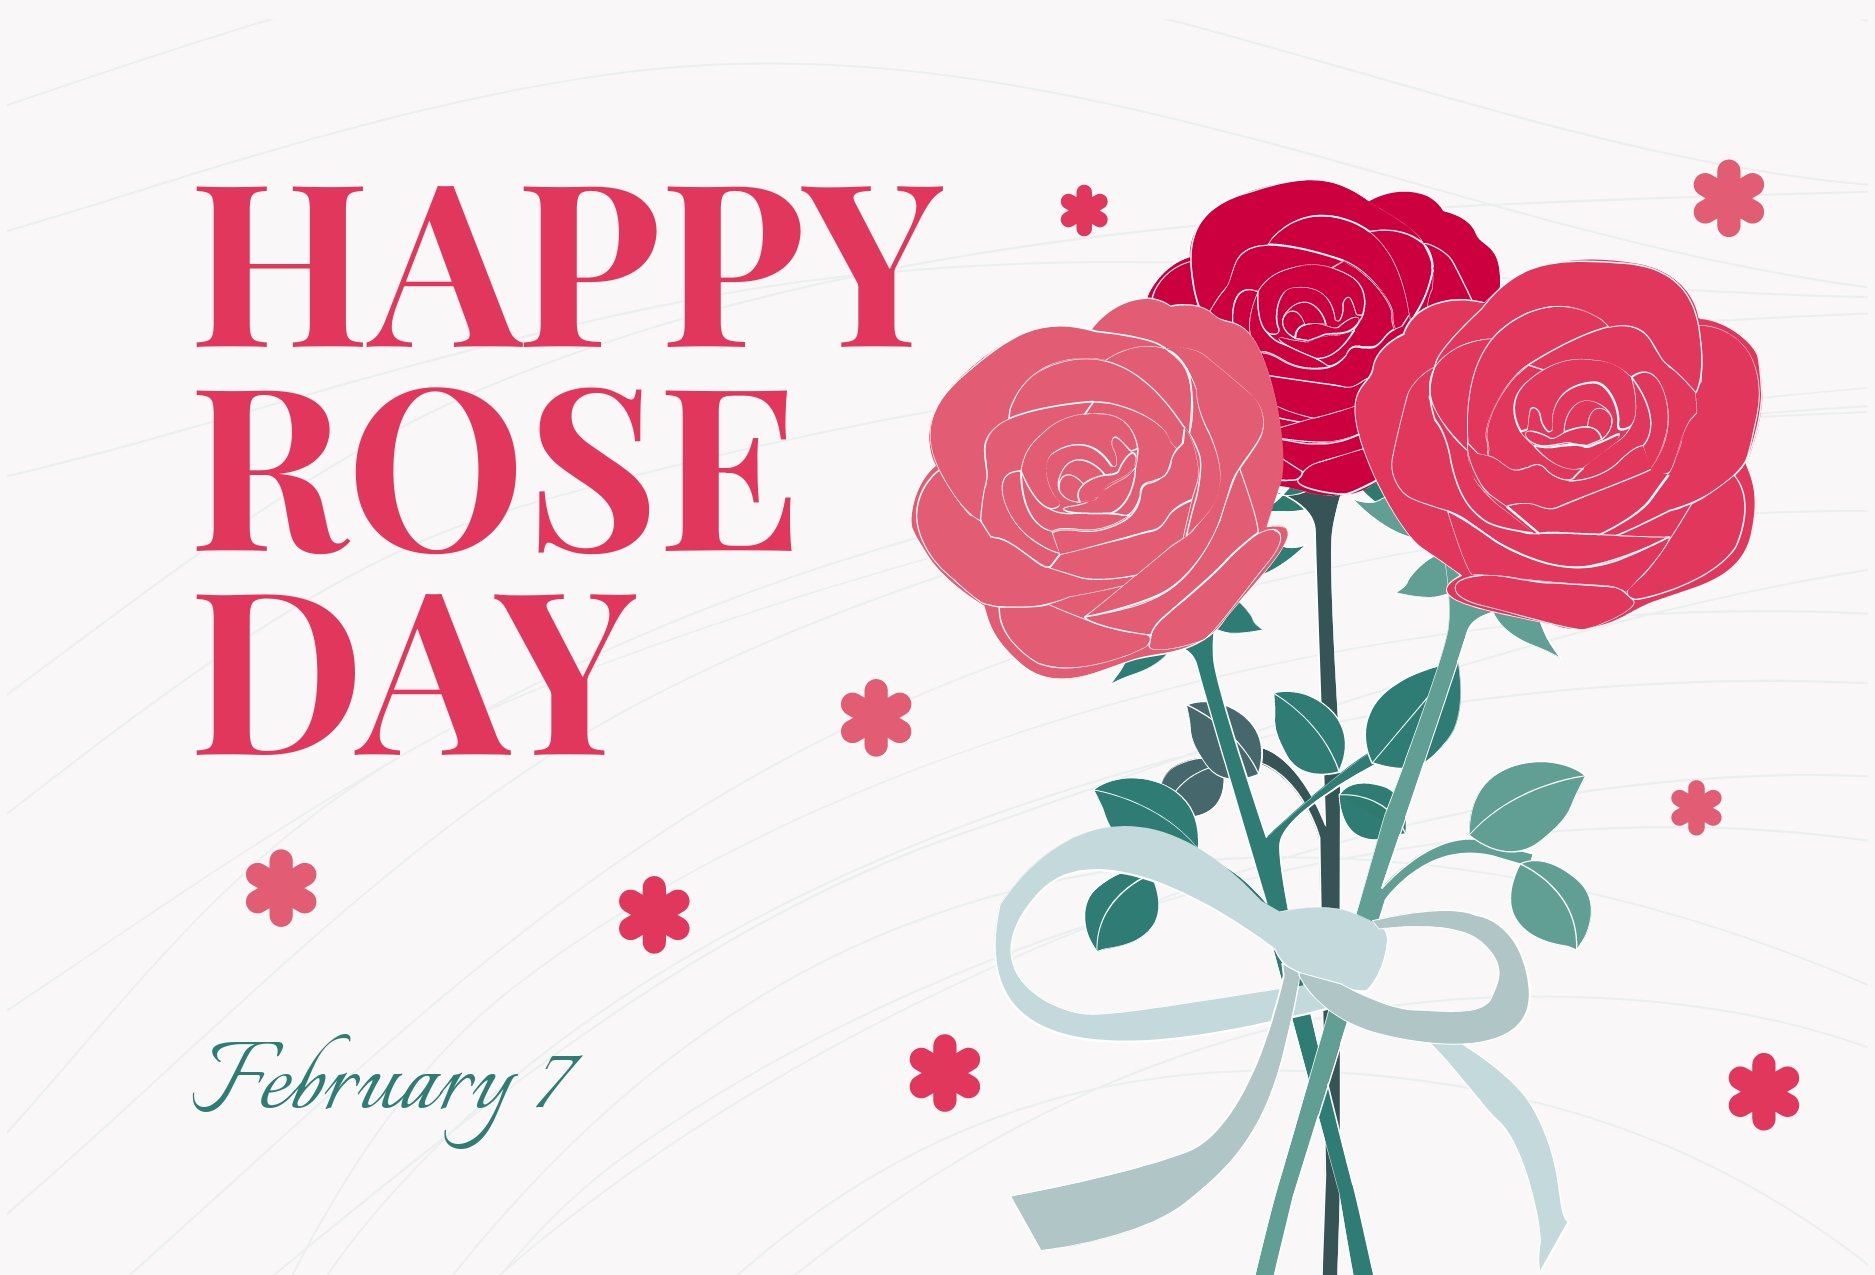 Rose Day Greeting Card